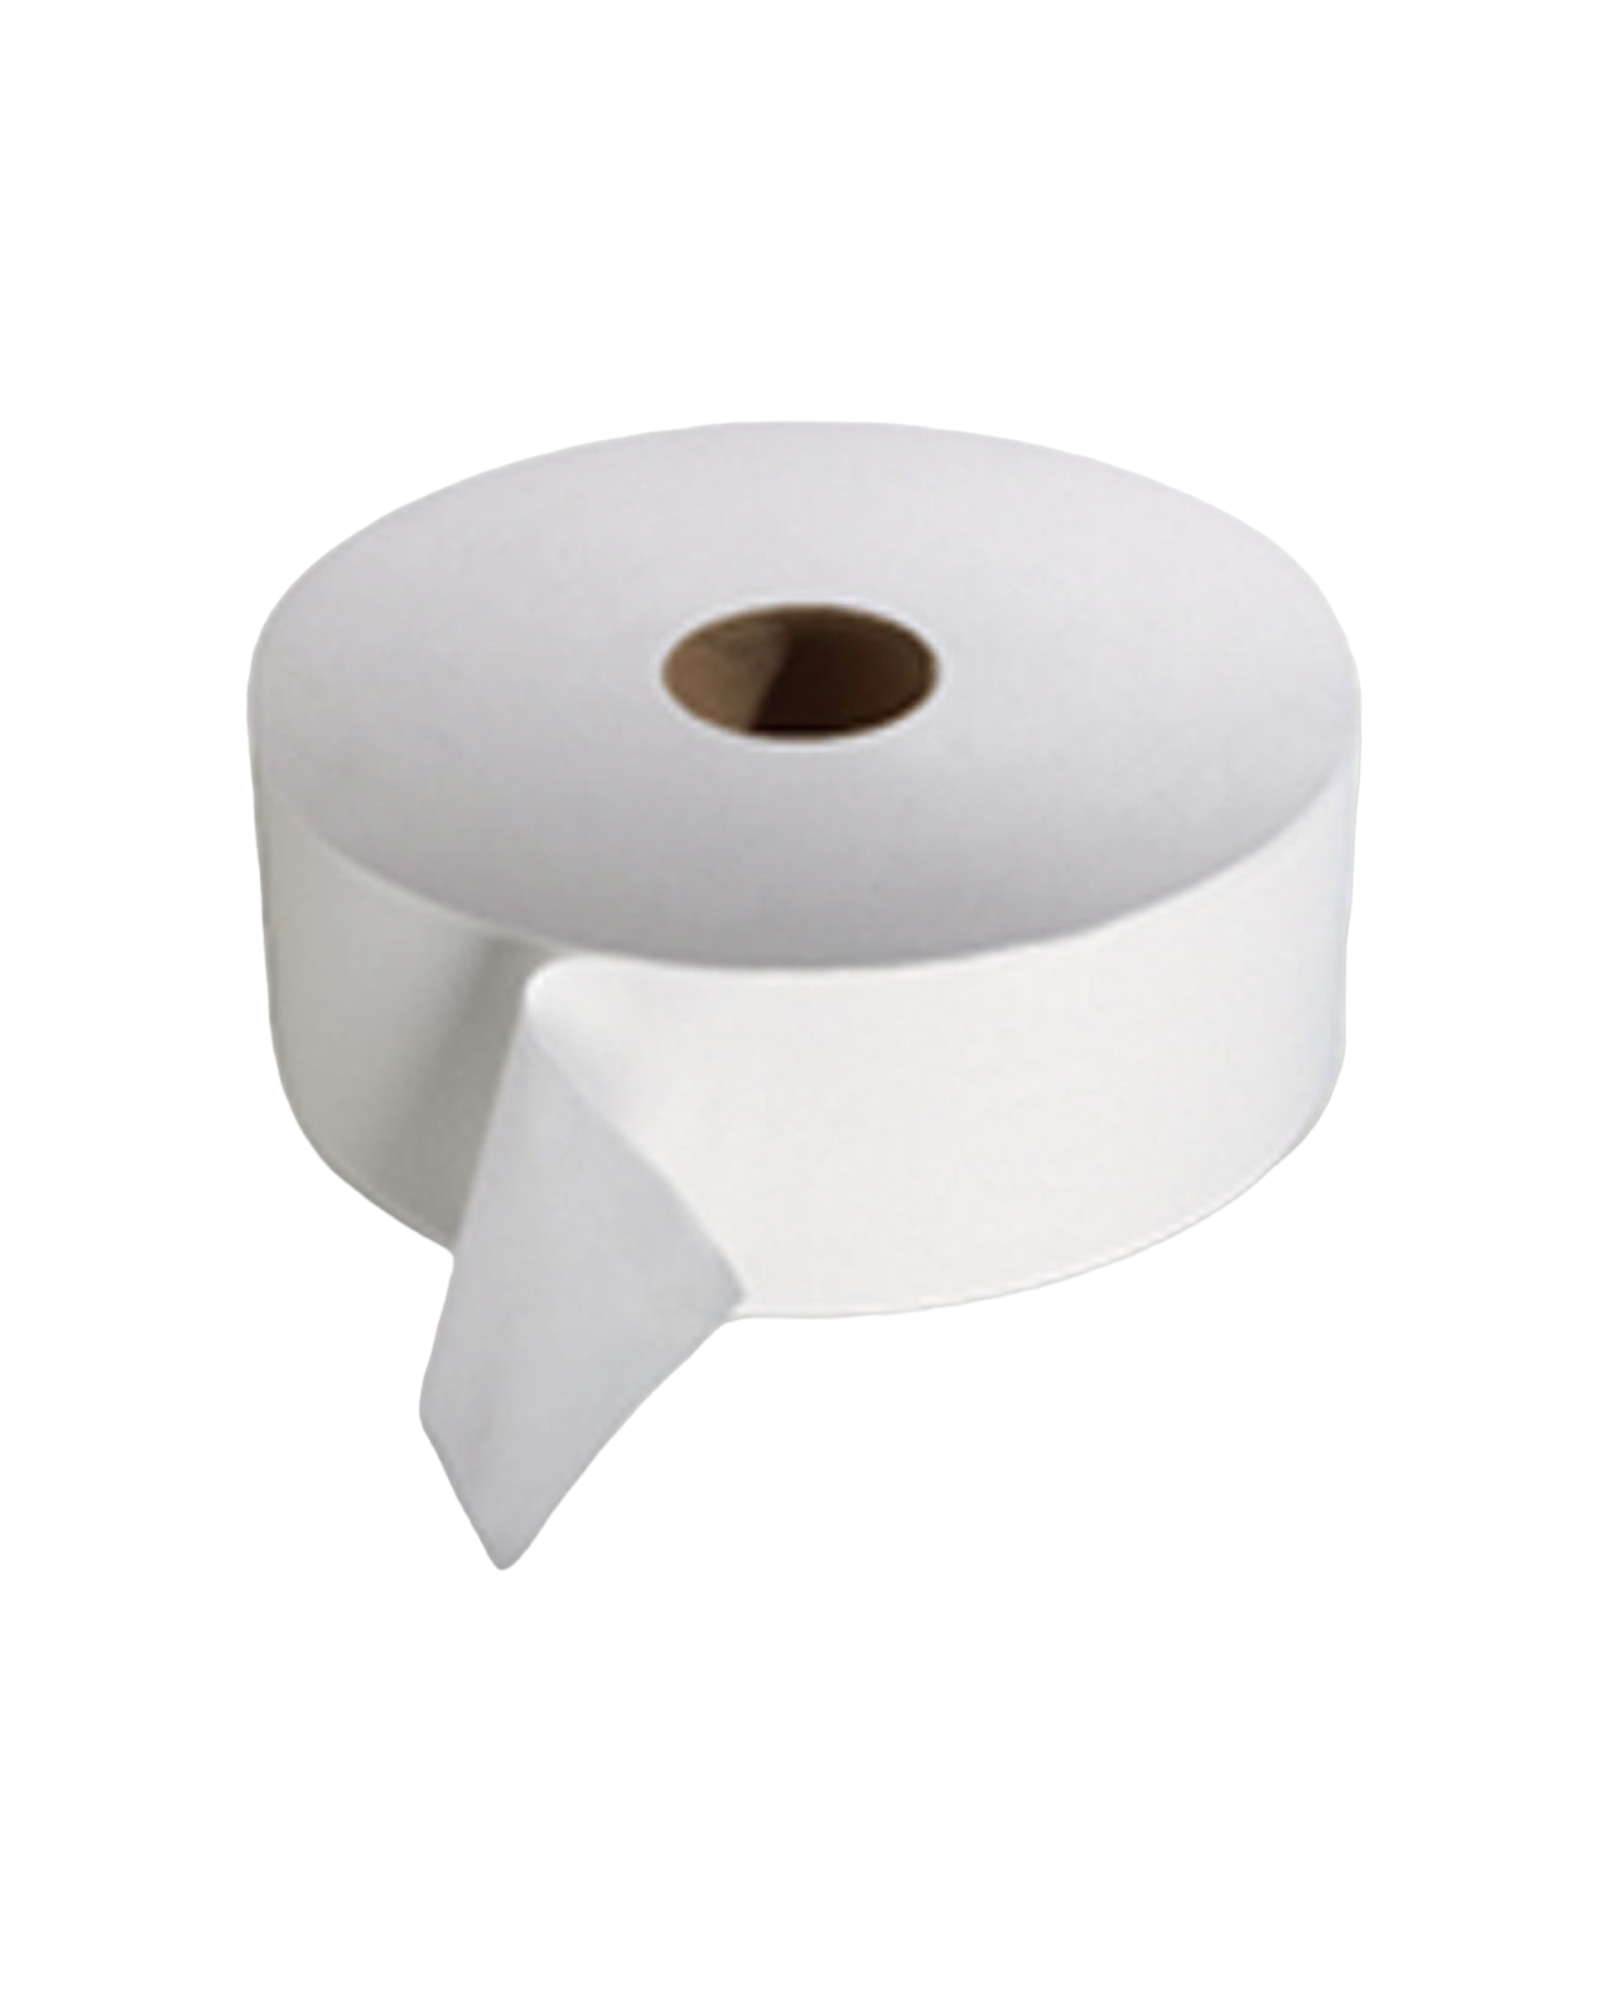 Tidy Wipe Toilet Paper Jumbo Roll 95mmx550m 1ply 0624SC